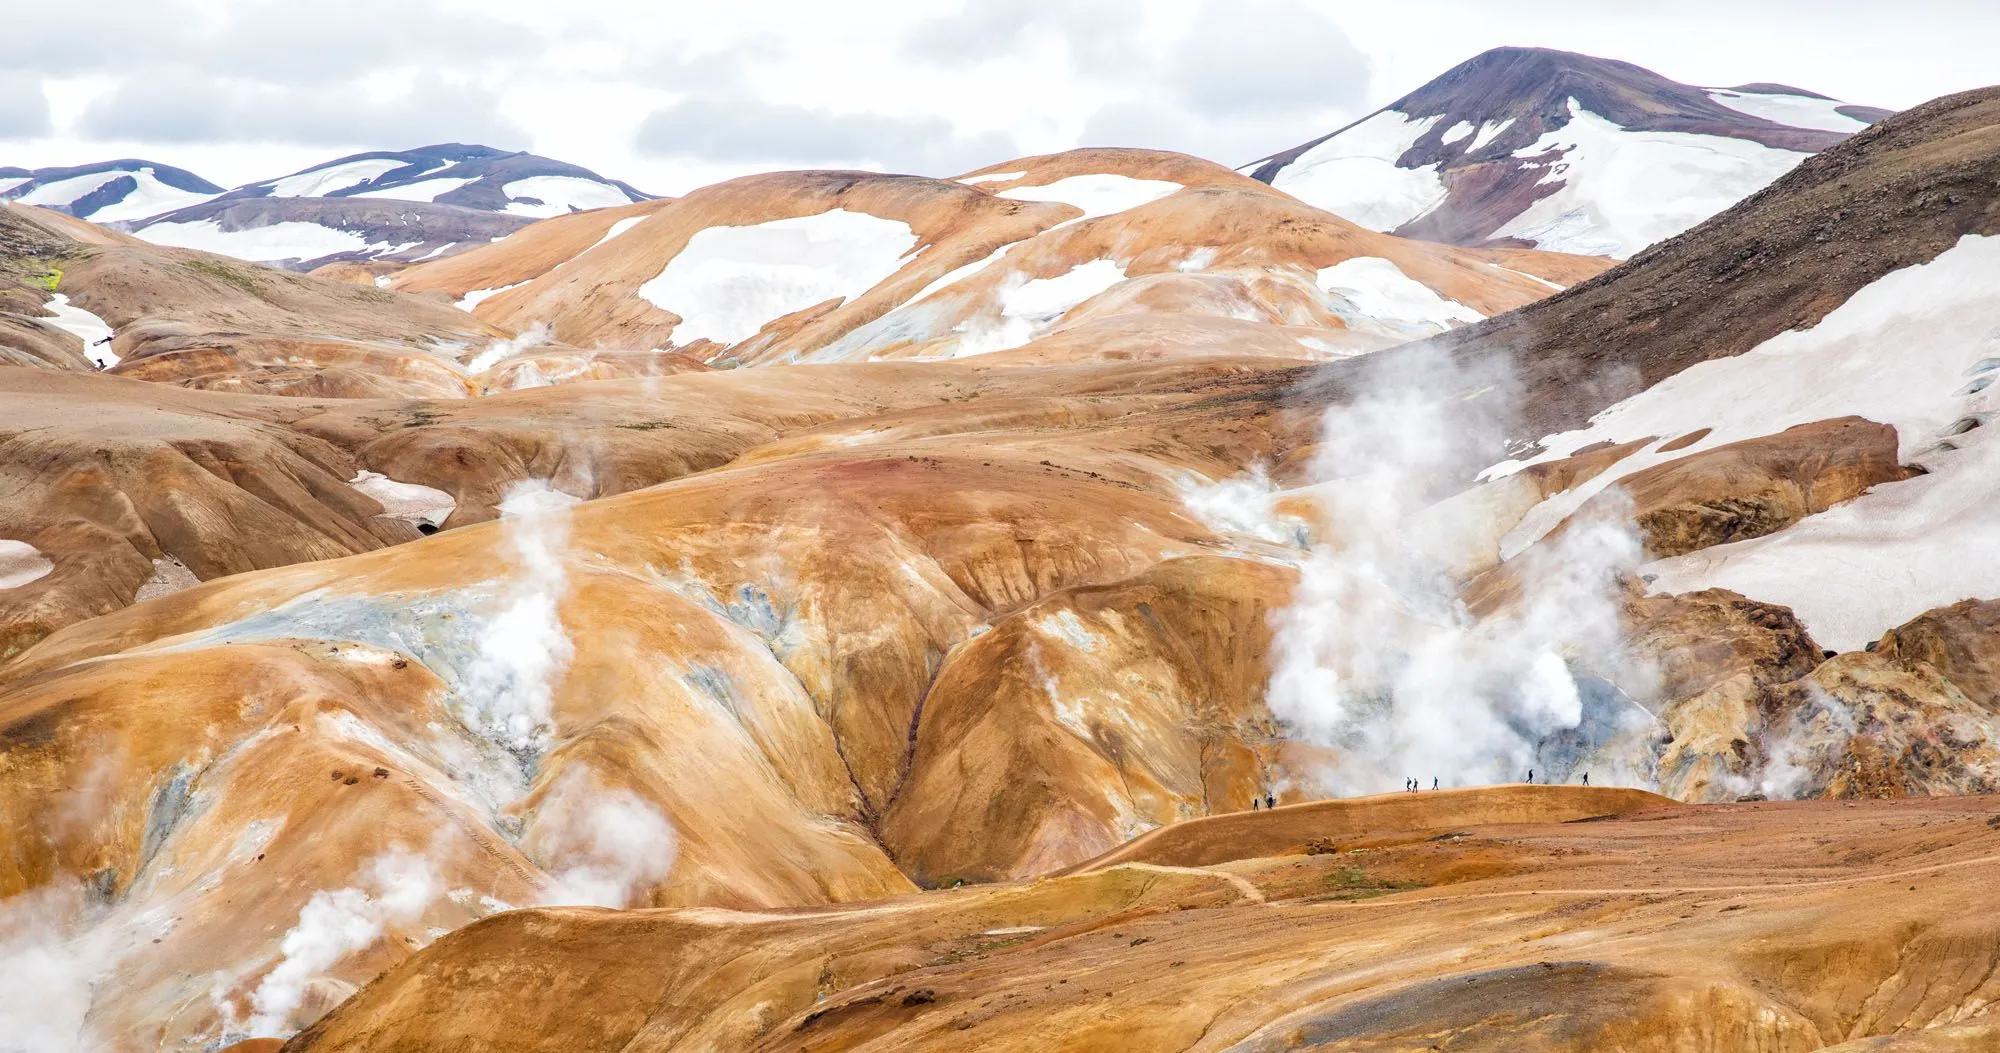 Kerlingarfjoll in Iceland, Europe | Volcanos,Trekking & Hiking - Rated 1